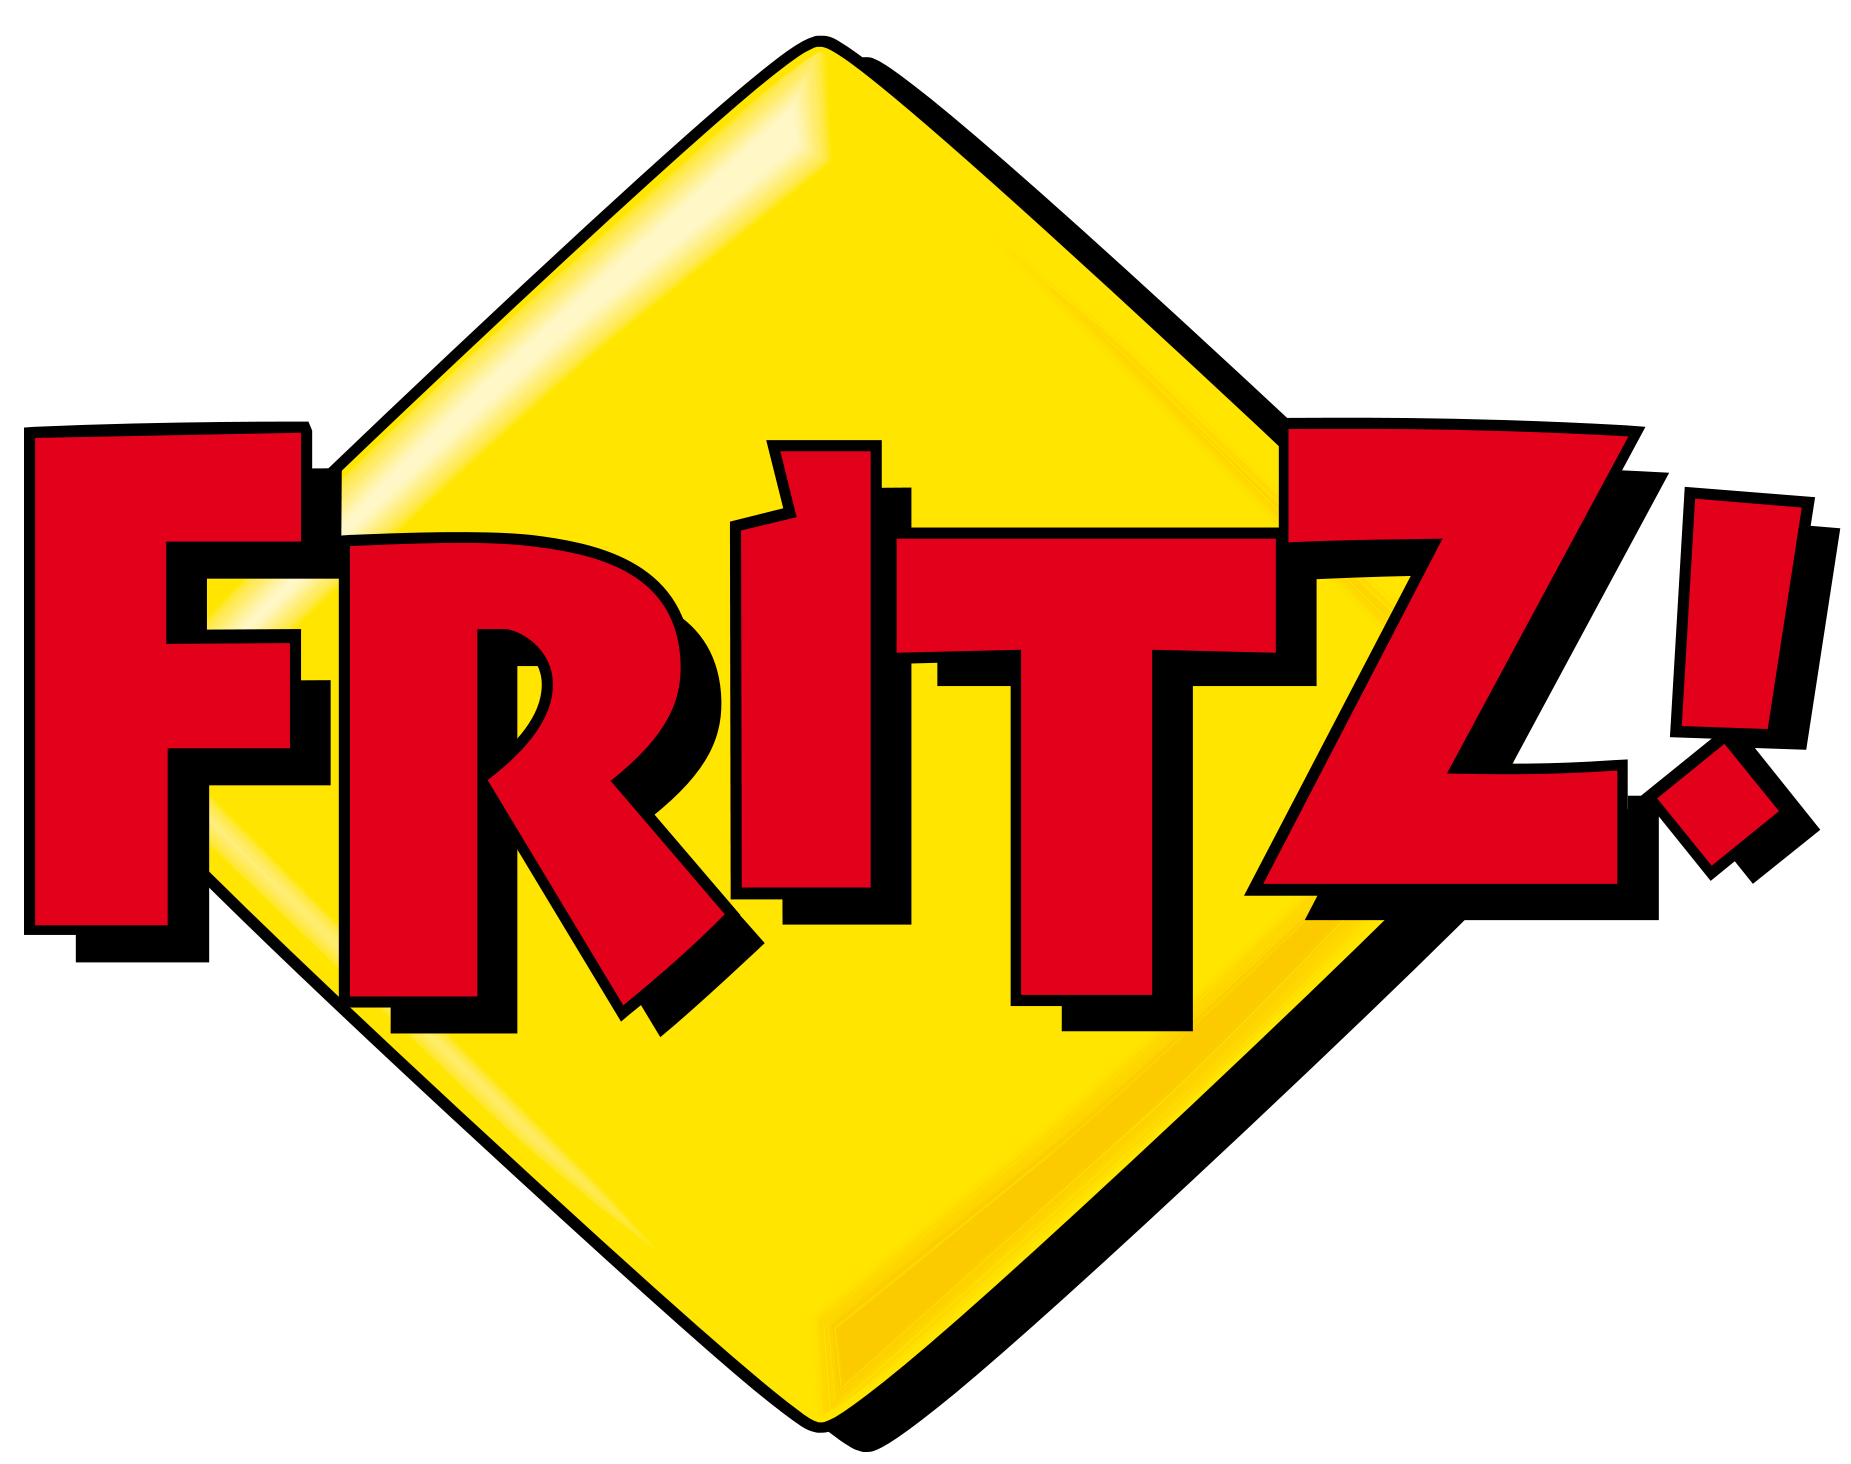 Fritz